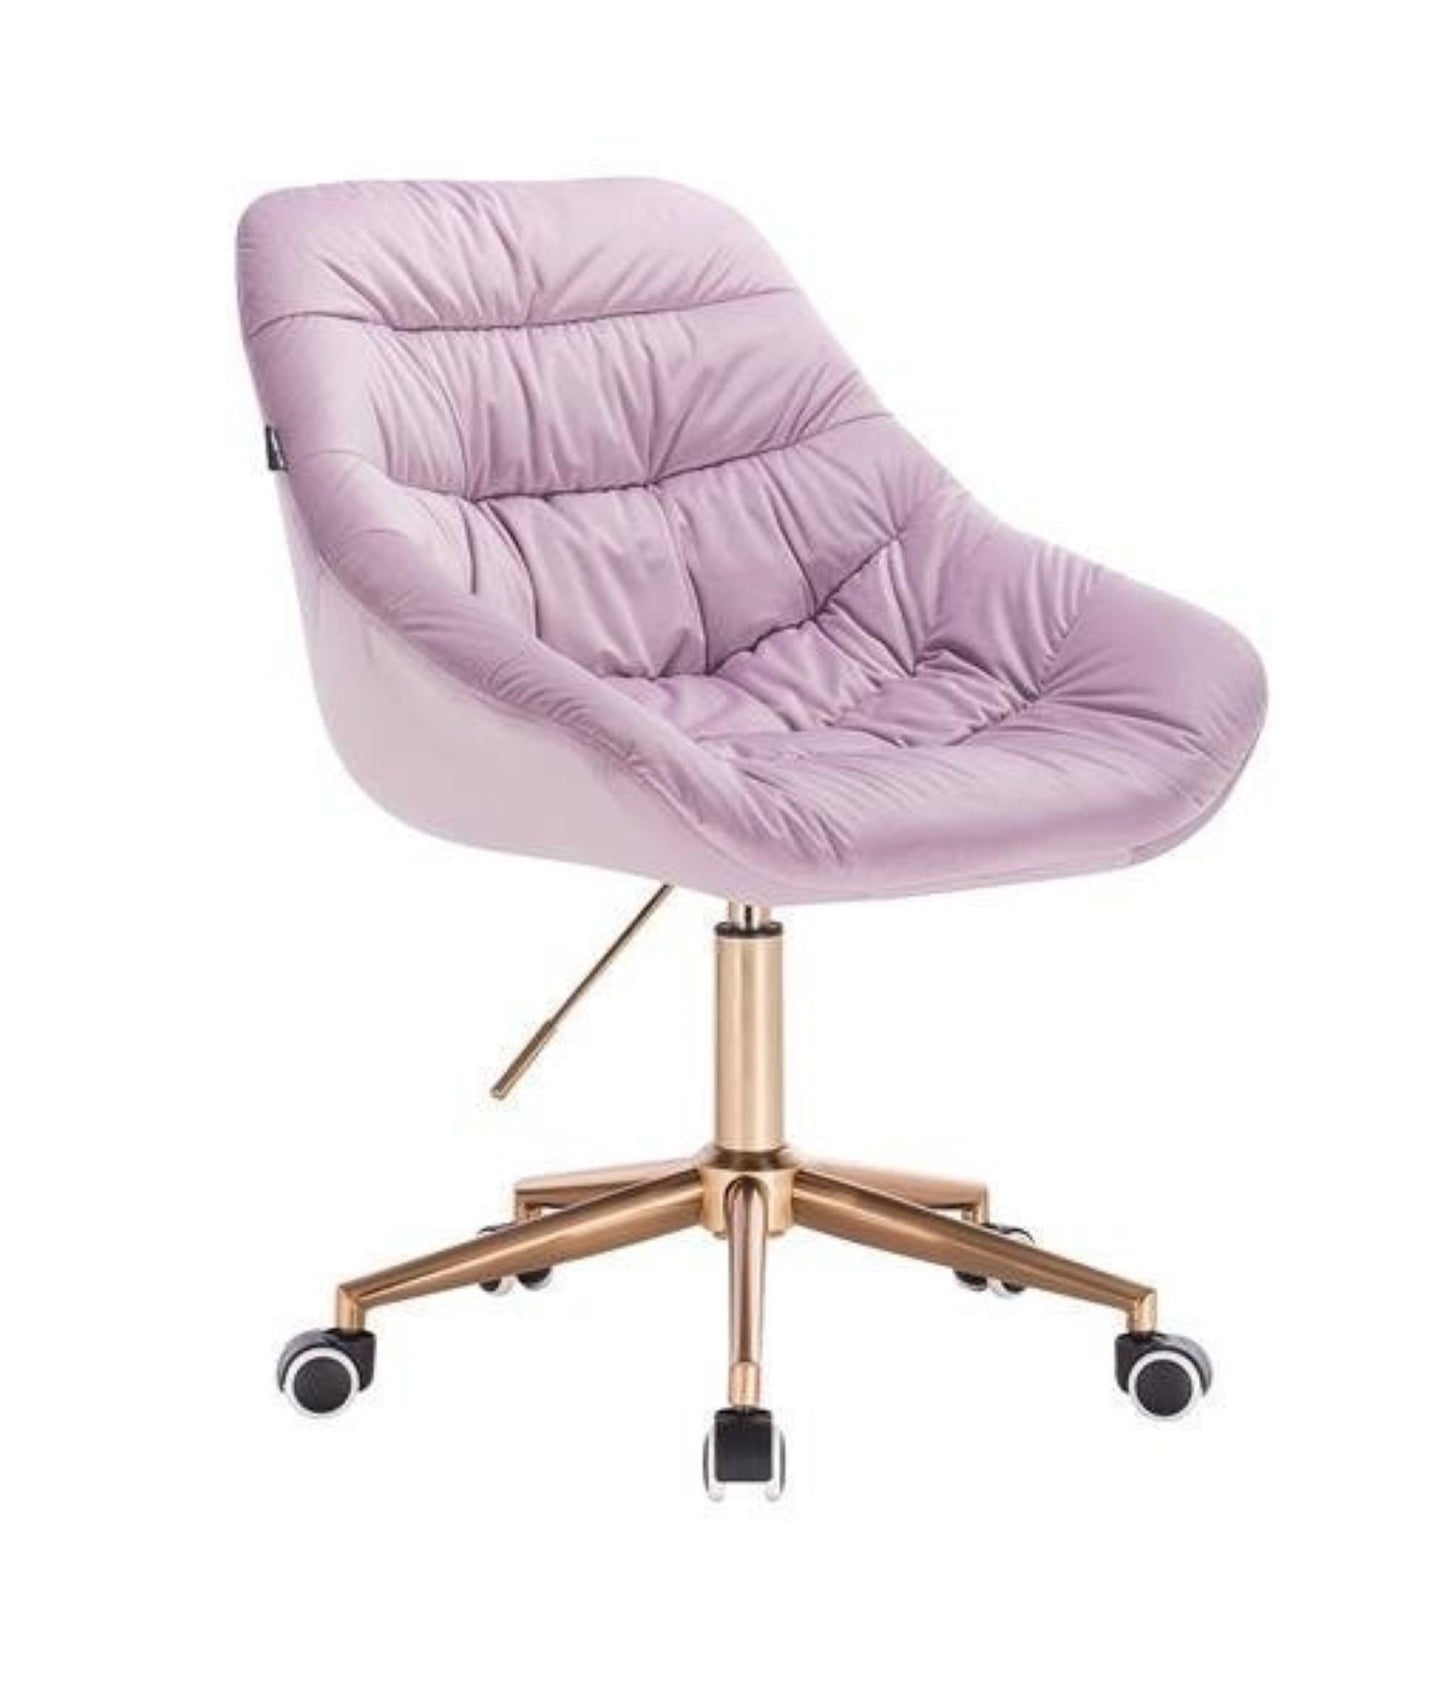 Designer velvet adjustable office/desk chair with gold swivel base in  Green/ Lilac / Pink